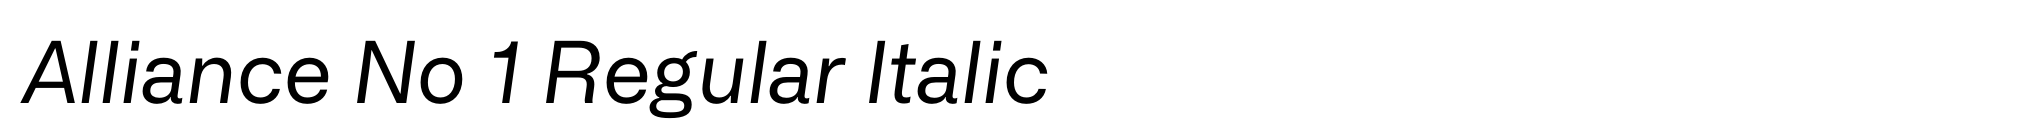 Alliance No 1 Regular Italic image